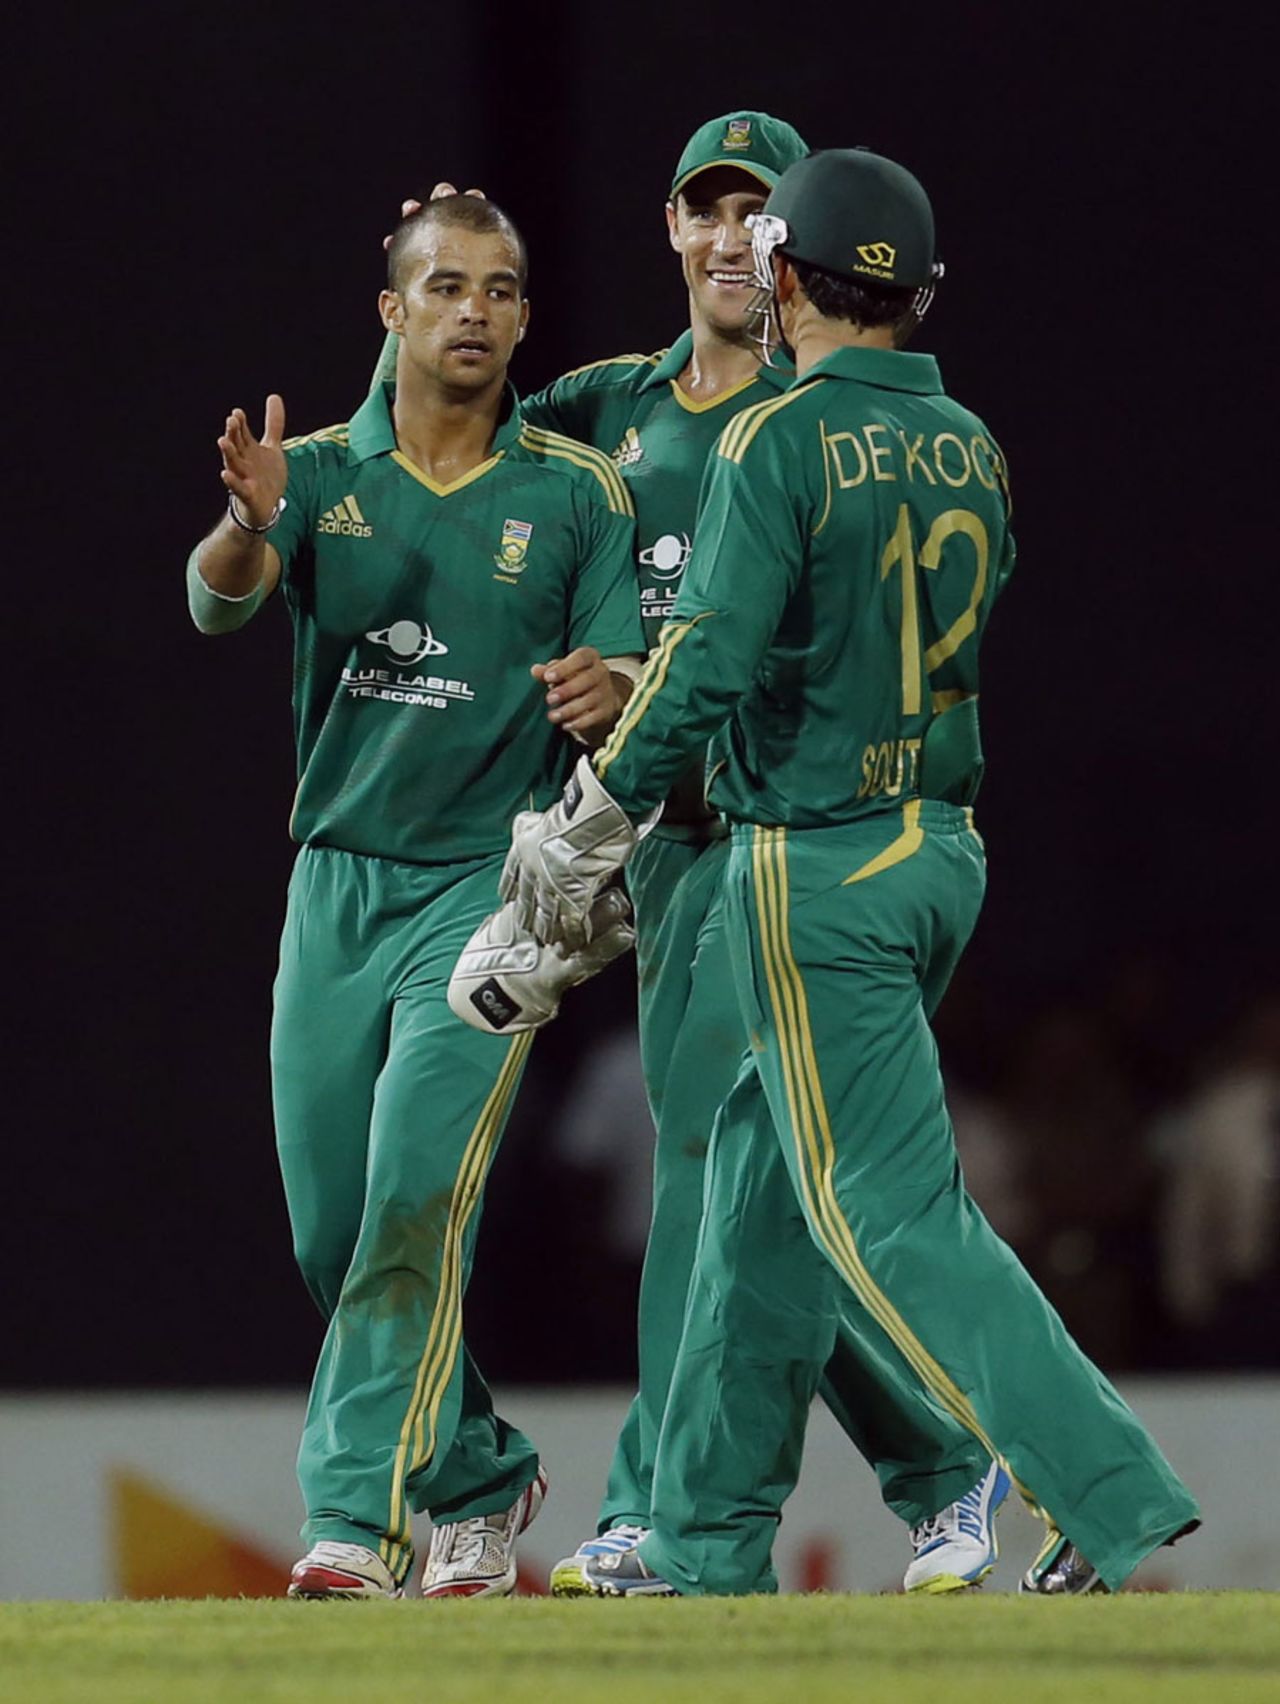 JP Duminy celebrates a dismissal with team-mates, Sri Lanka v South Africa, 1st T20, Colombo, August 2, 2013